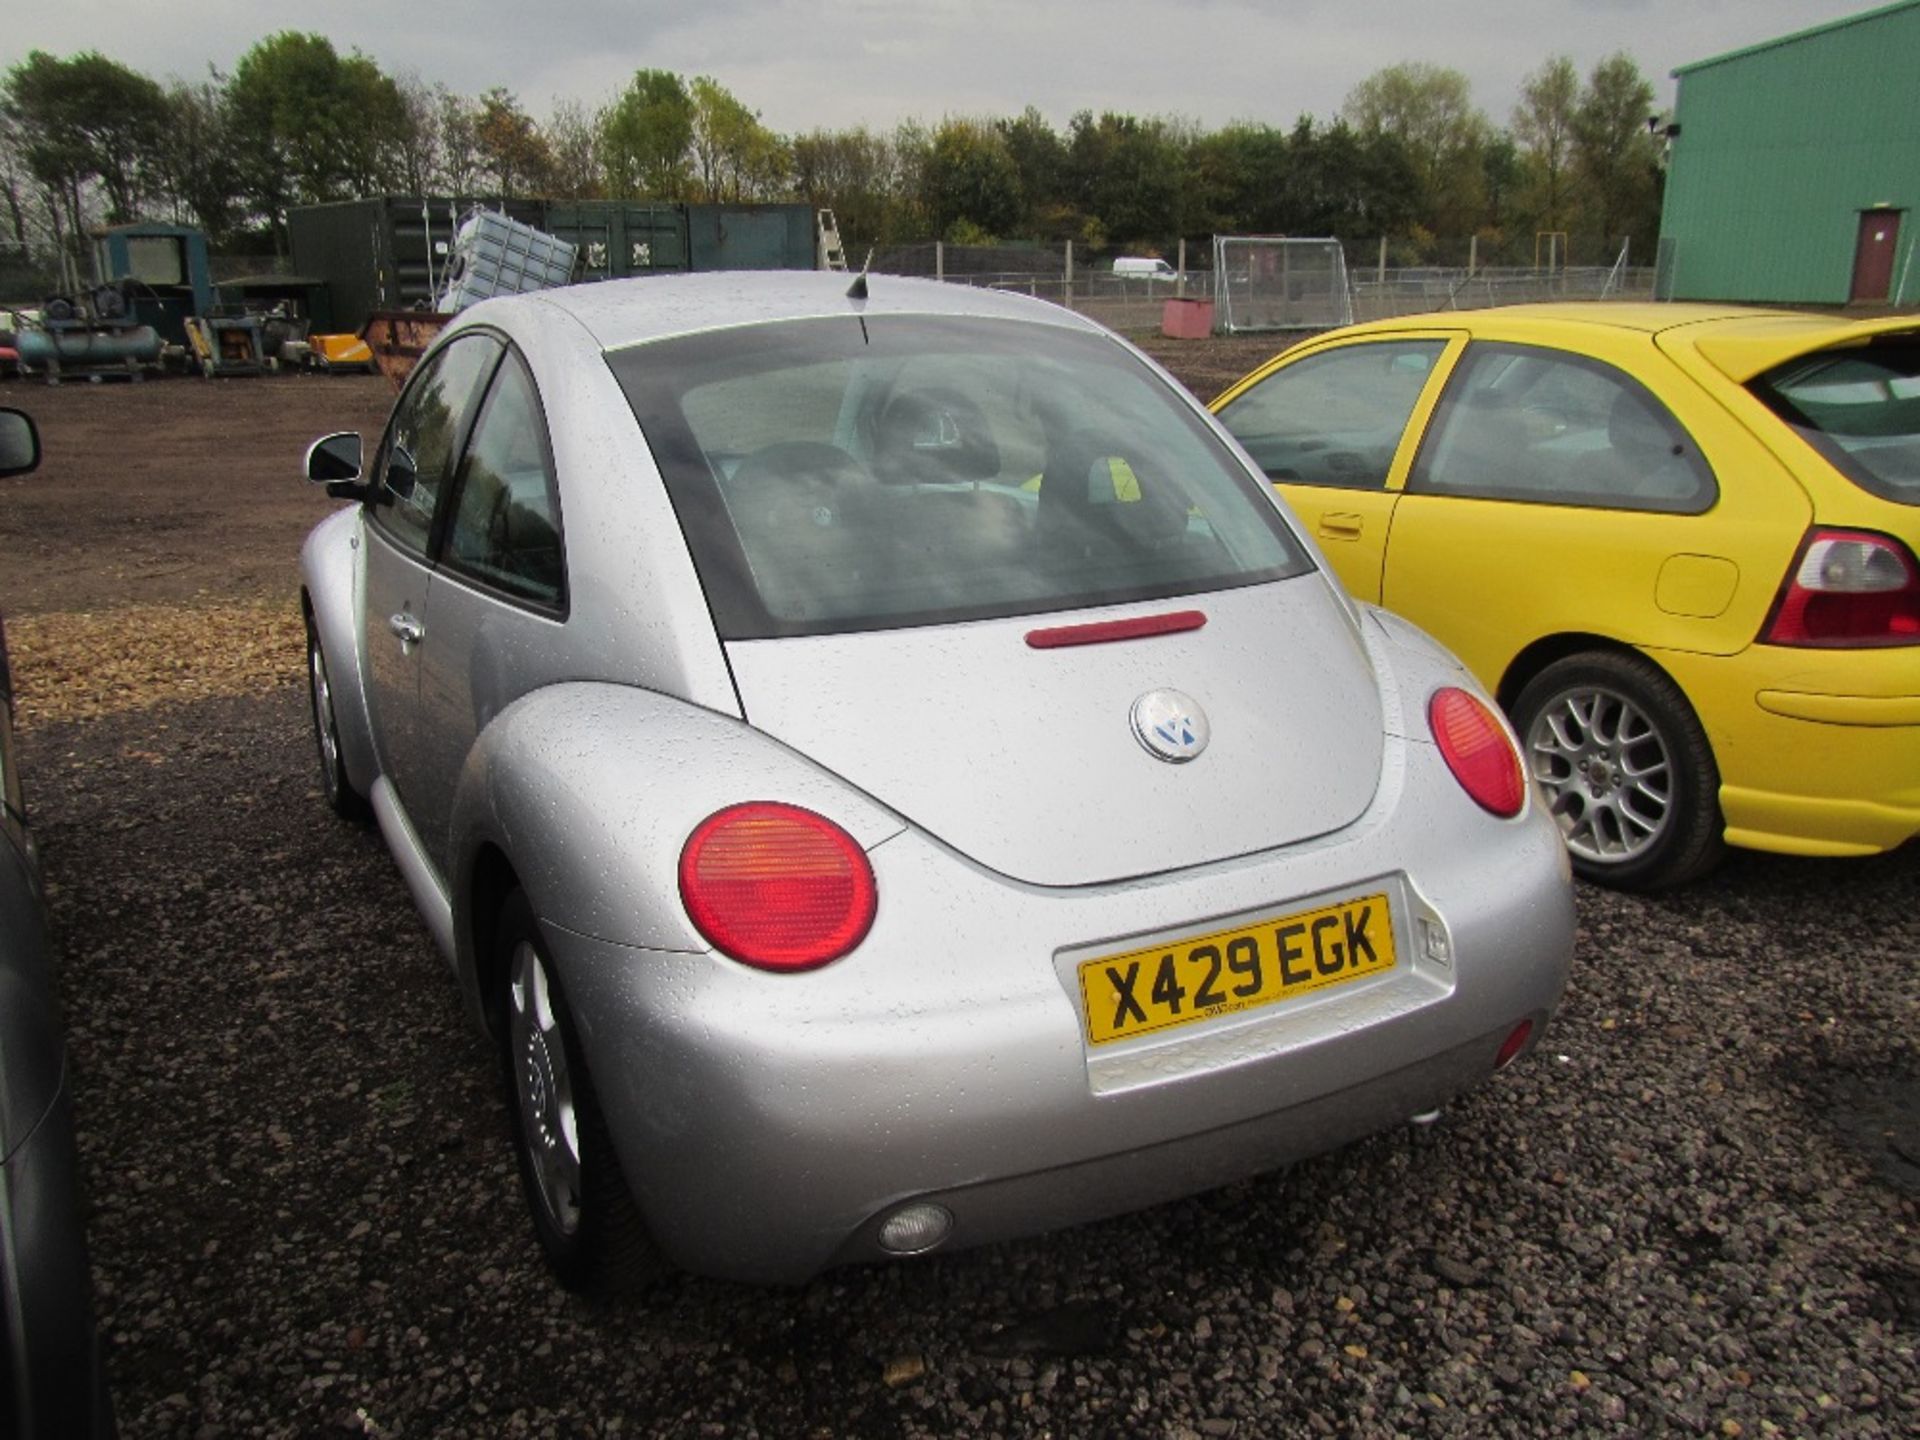 Volkswagon Beetle 2.0 Litre Petrol. Reg Docs will be supplied. Mileage: 88,383. MOT till 5/6/17. - Image 5 of 5